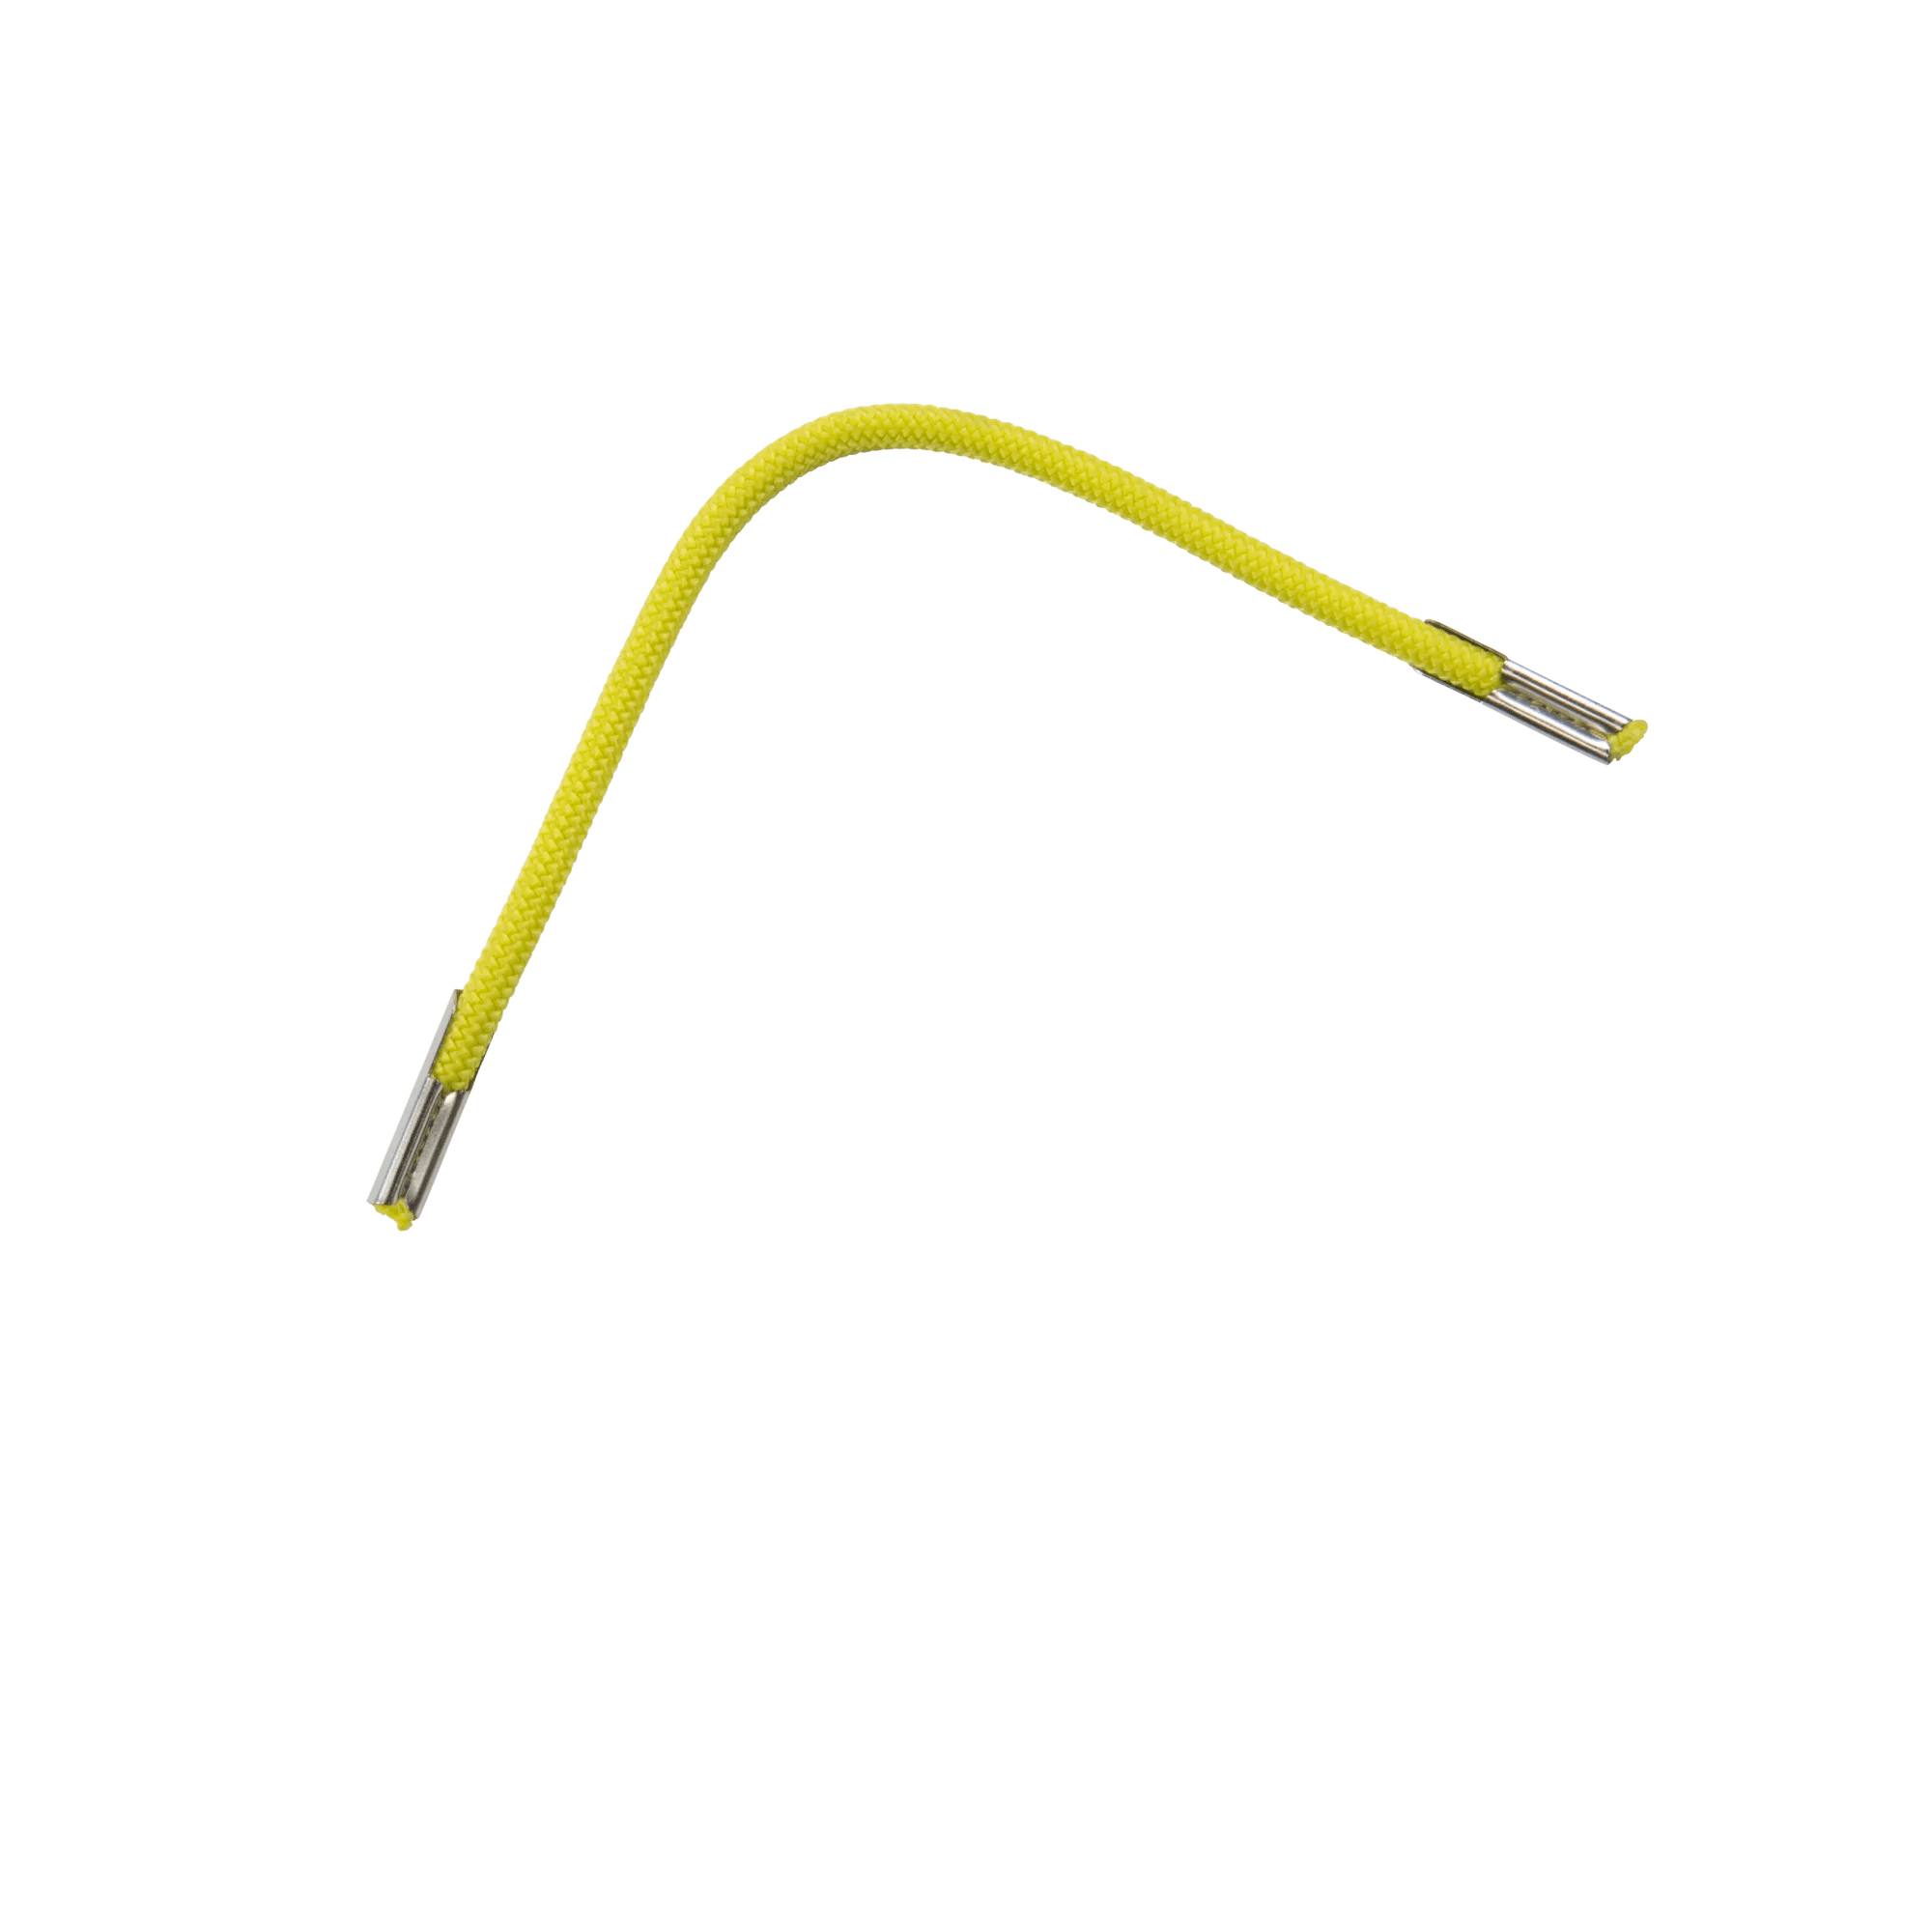 PELICAN - Cordage élastique jaune vert de 23 cm (9 po) -  - PS1631 - ISO 